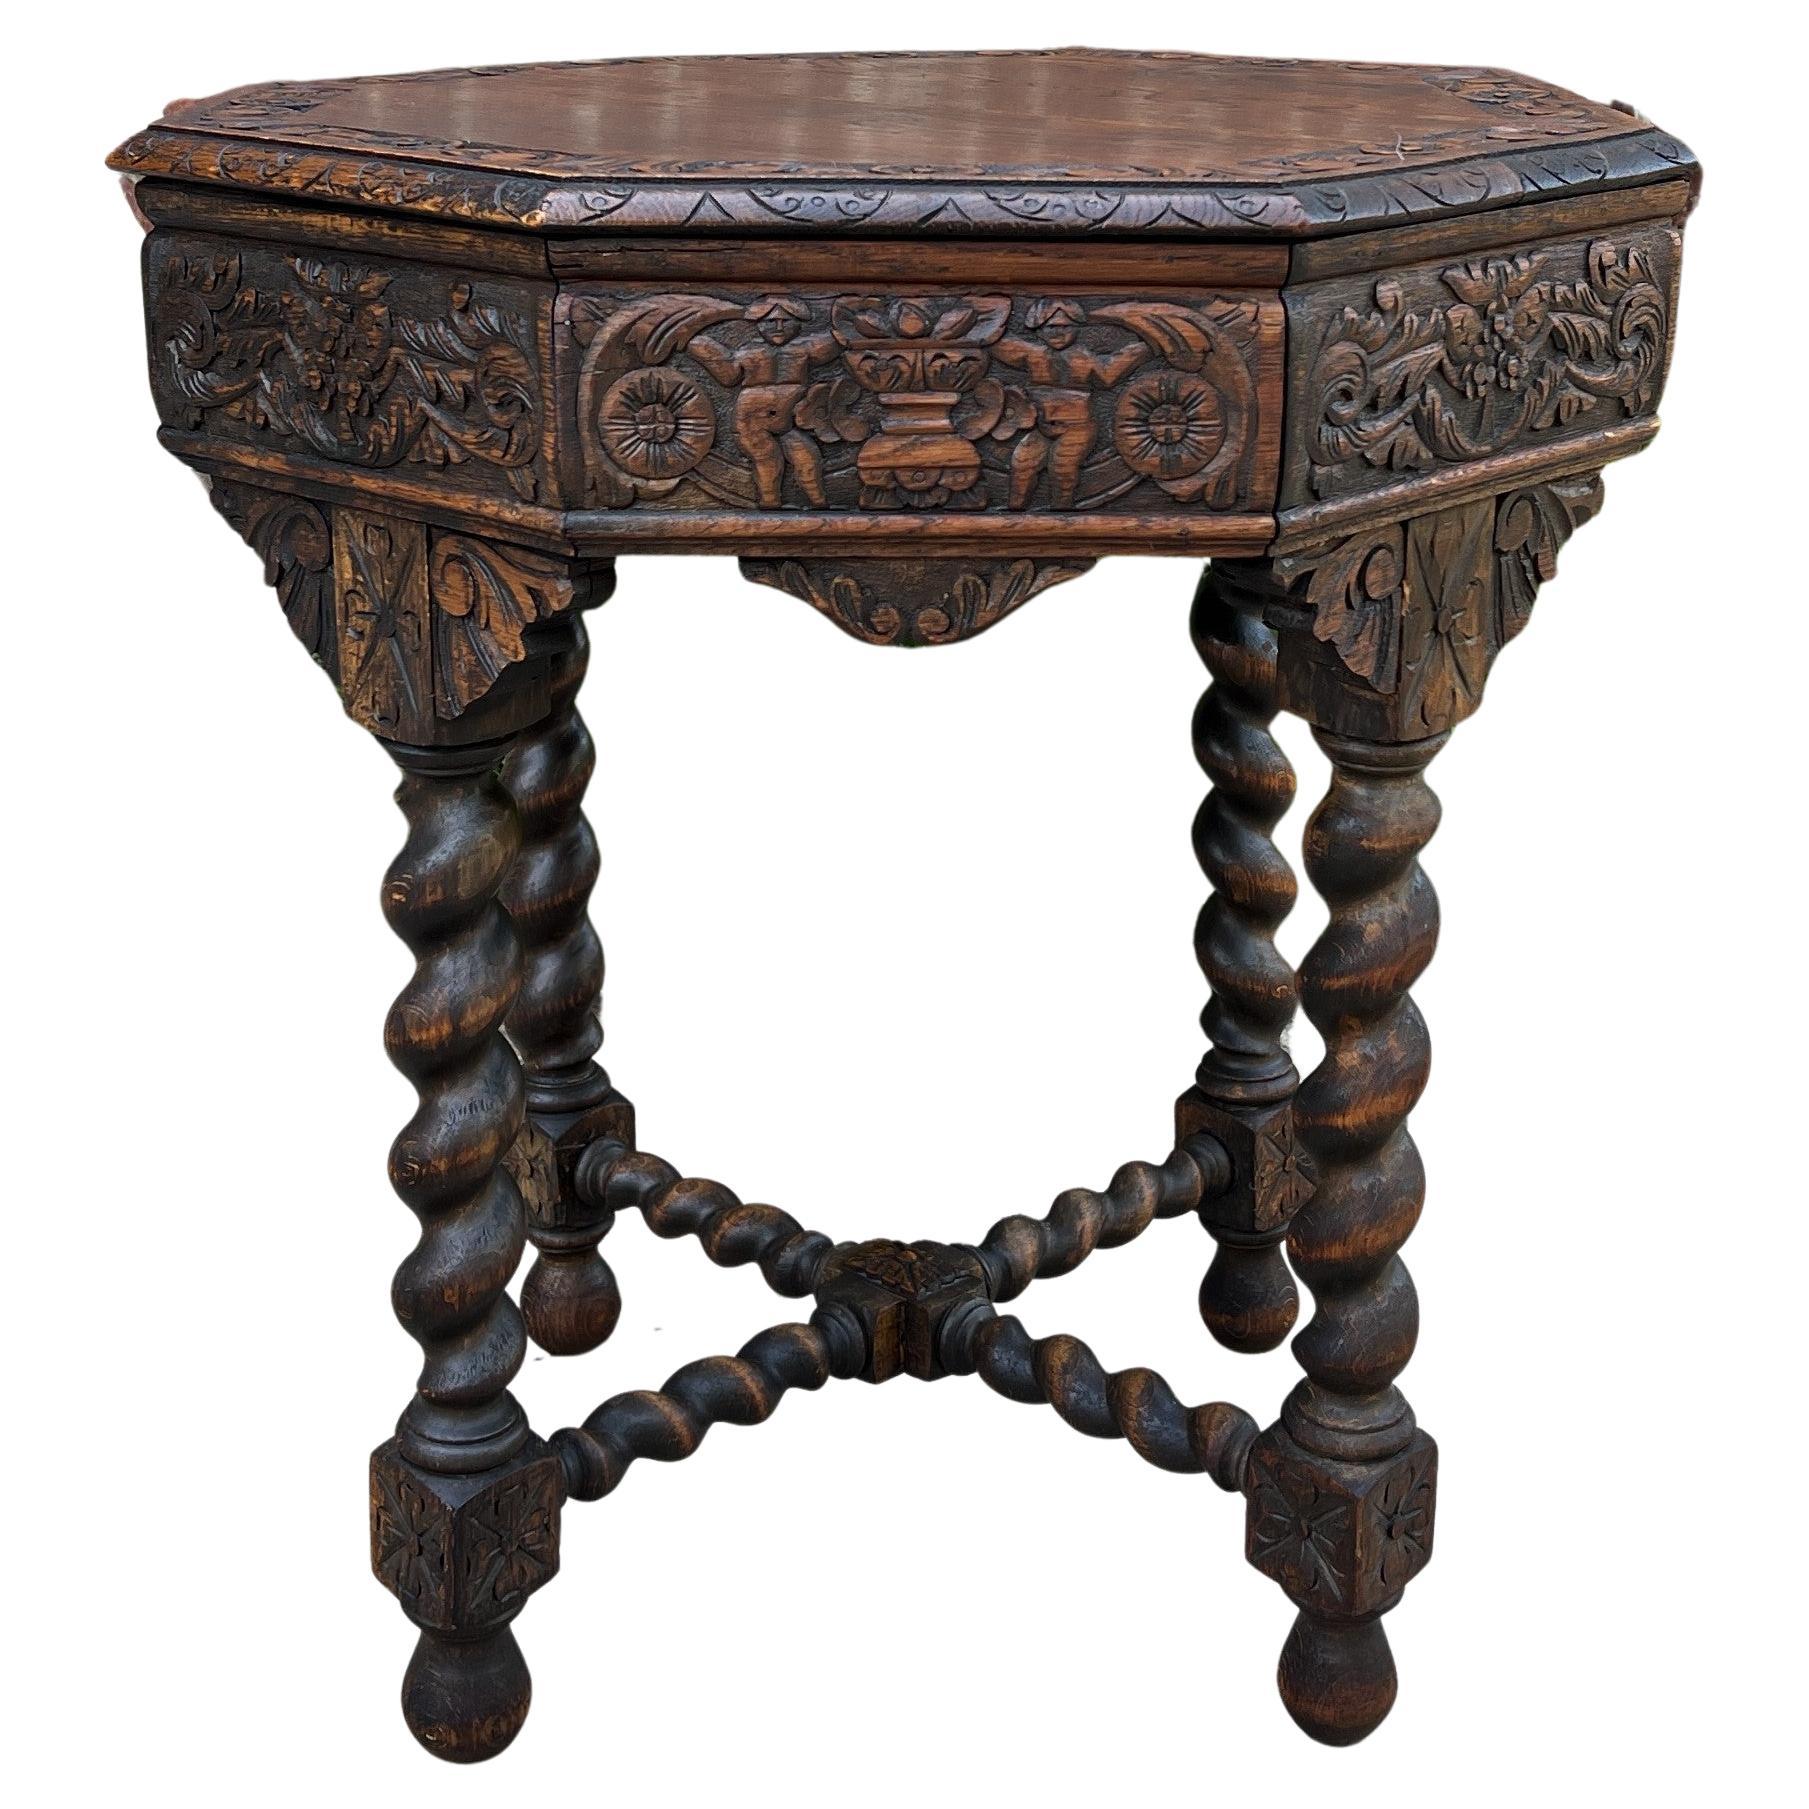 Antique French Table Barley Twist Octagonal Renaissance Revival Carved Oak 19thc